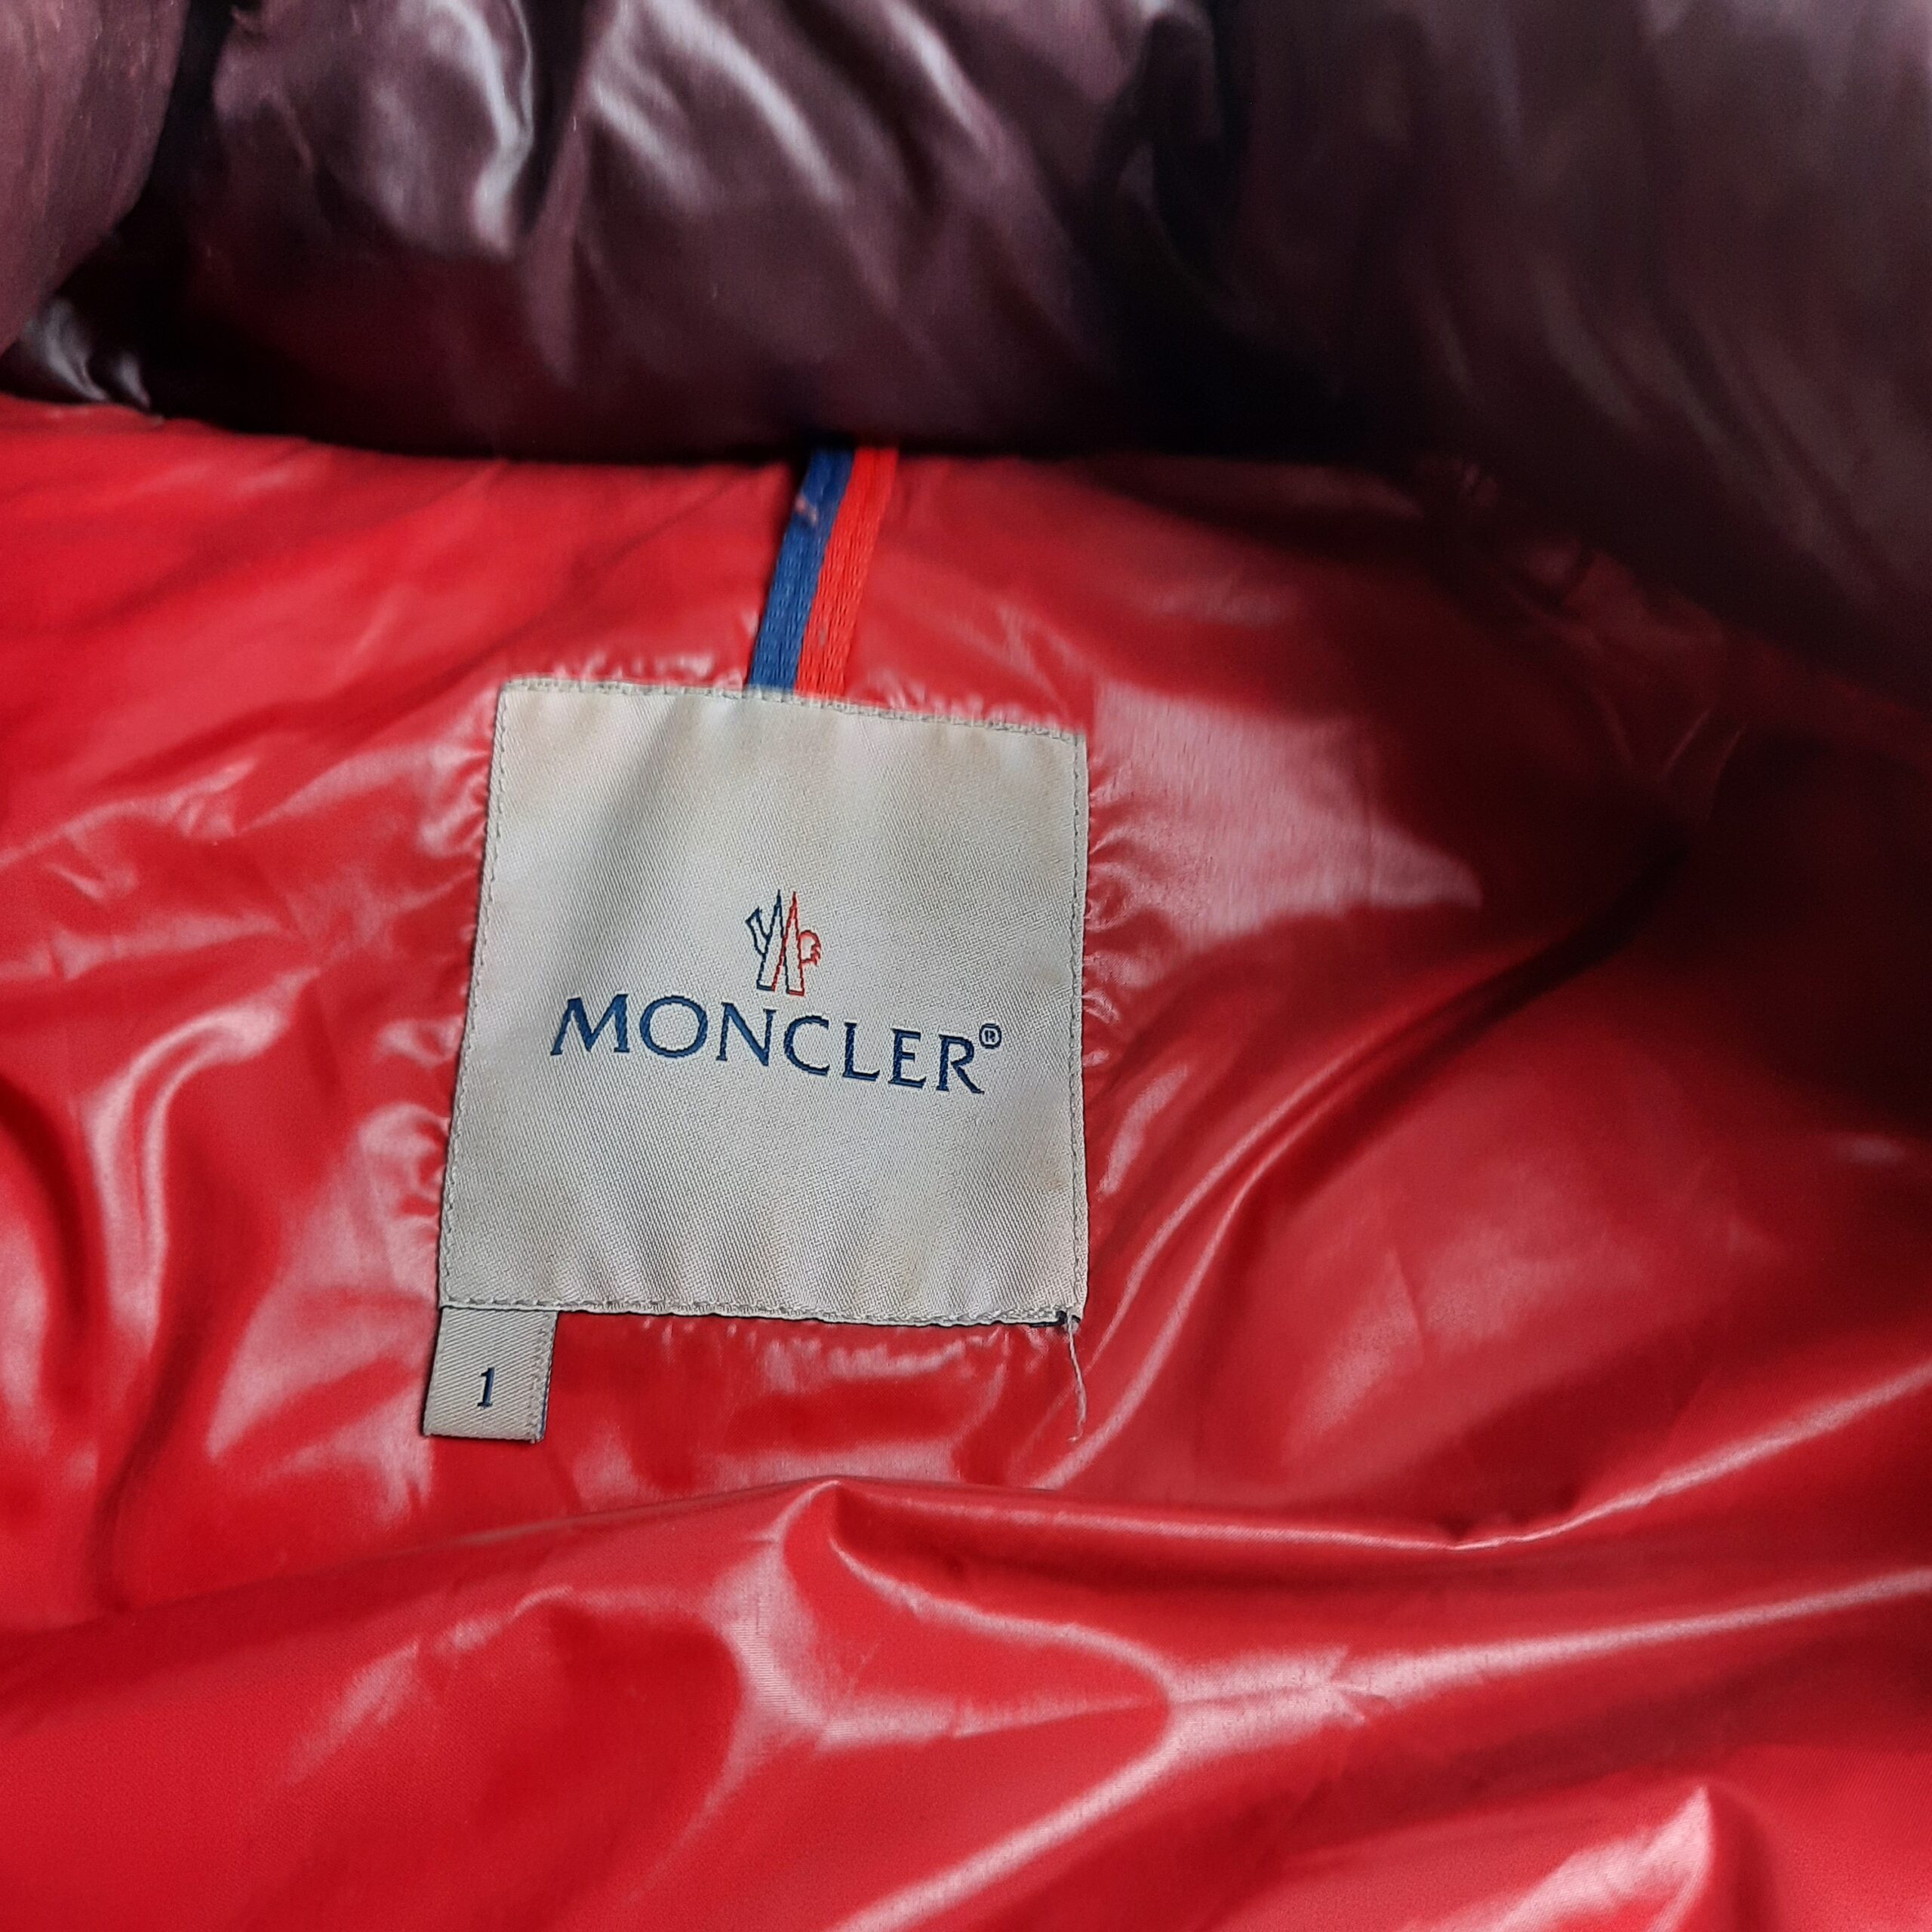 Moncler Tibet - Authentic Luxury Designer